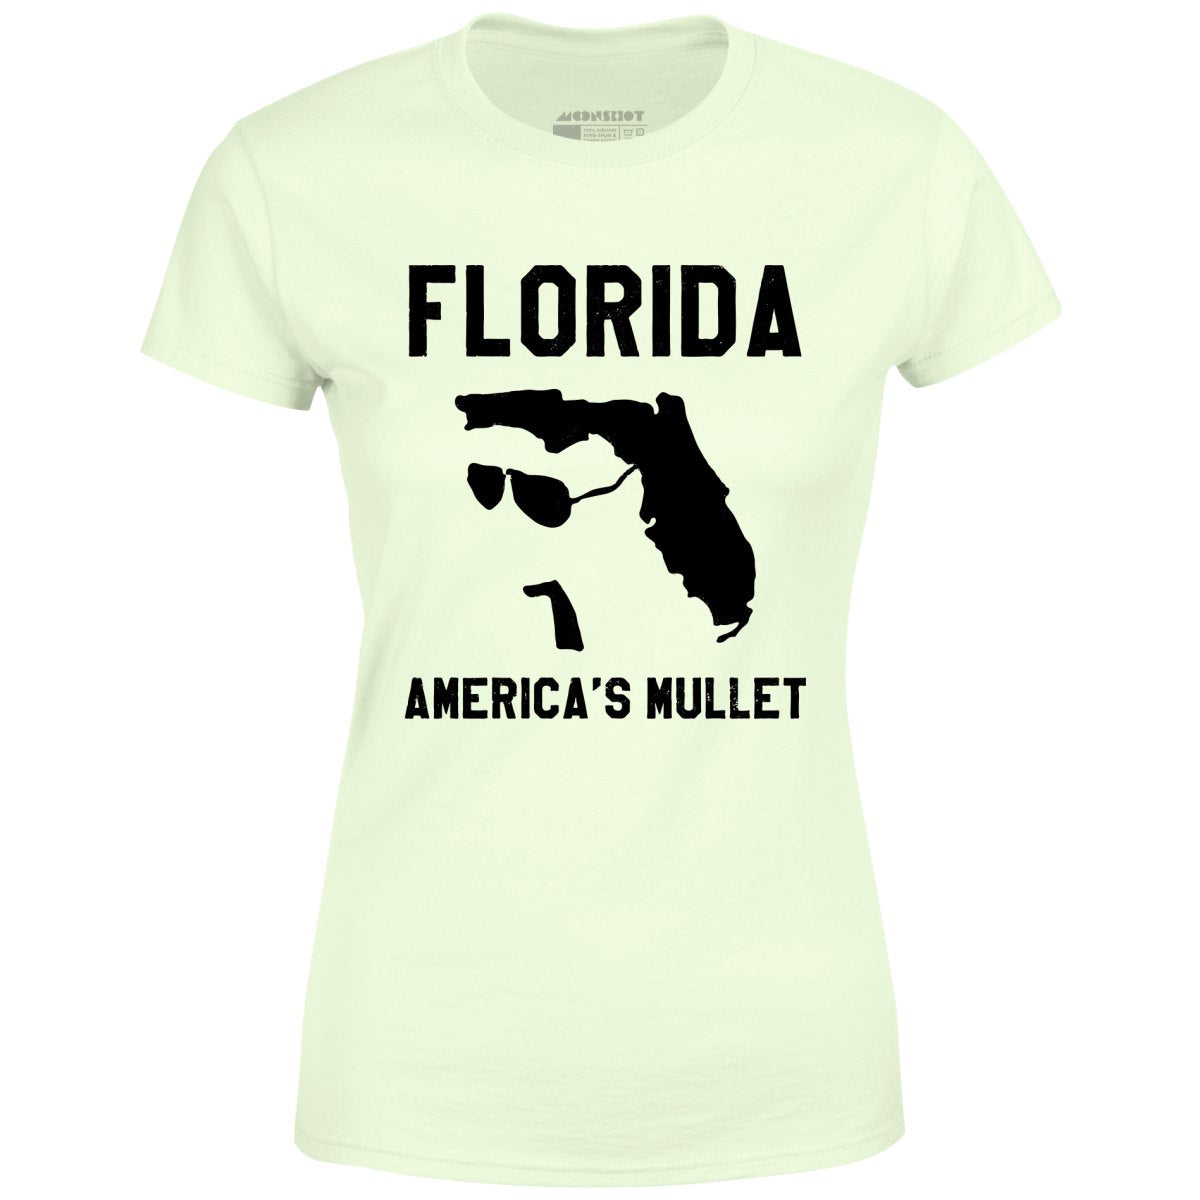 Florida America's Mullet - Women's T-Shirt